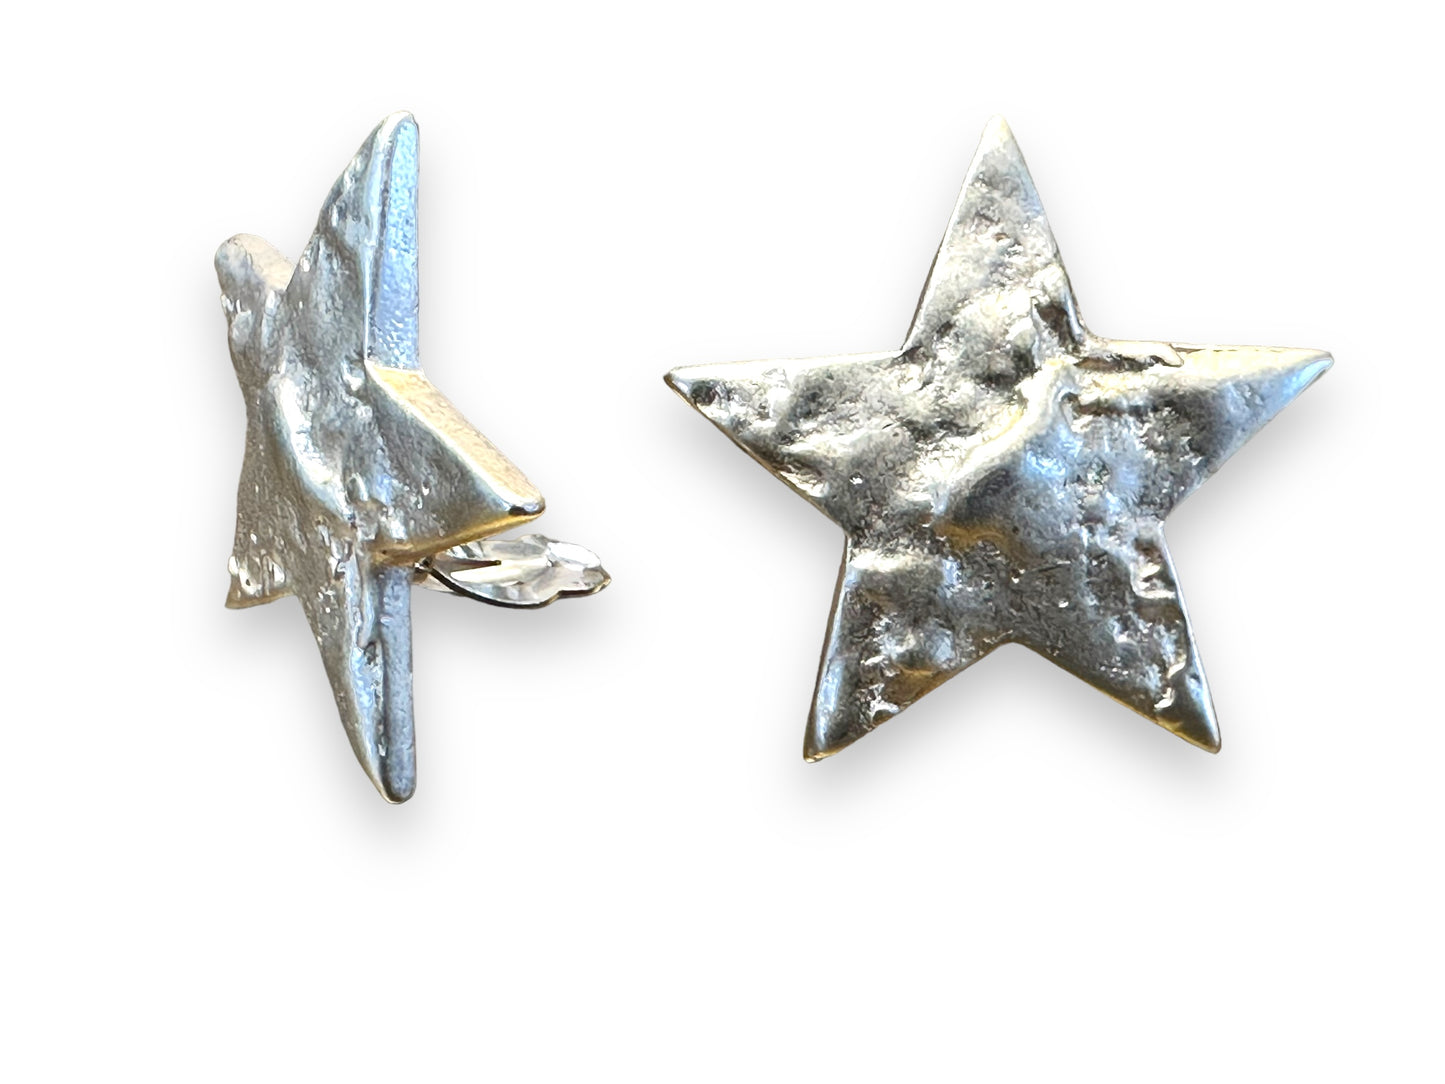 1990s “P.E.P” Large Star Clip On Earrings